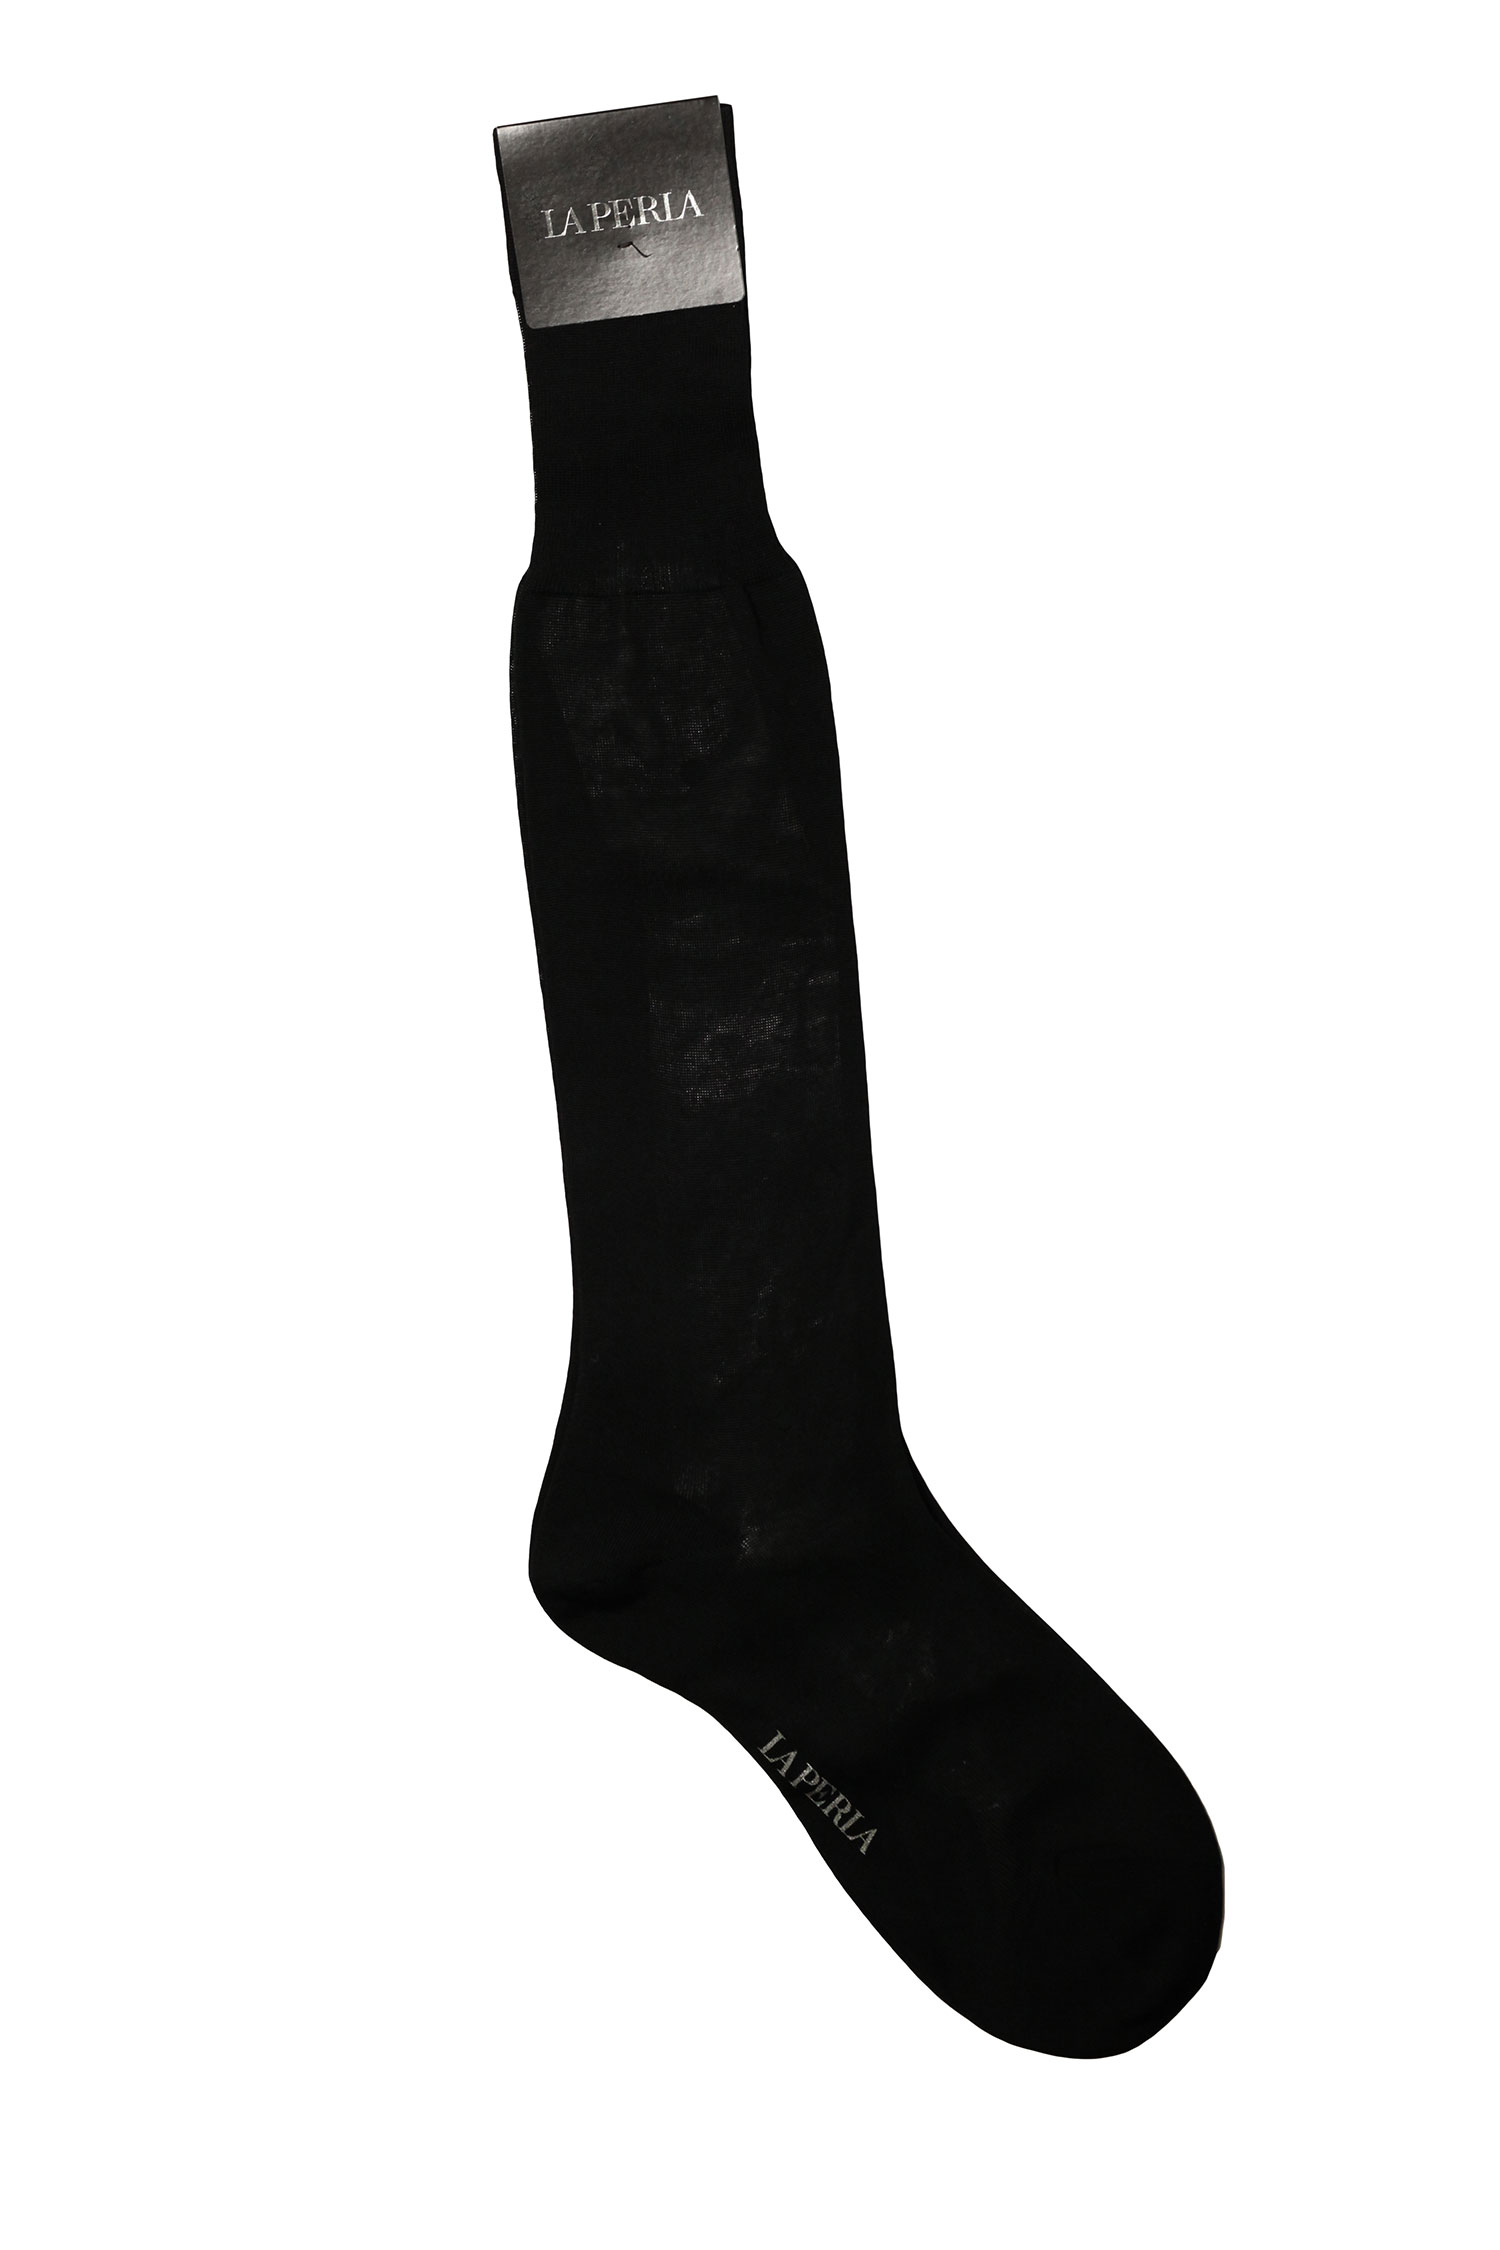 La Perla Men's Black 100% Cotton Long Sock (13.5)